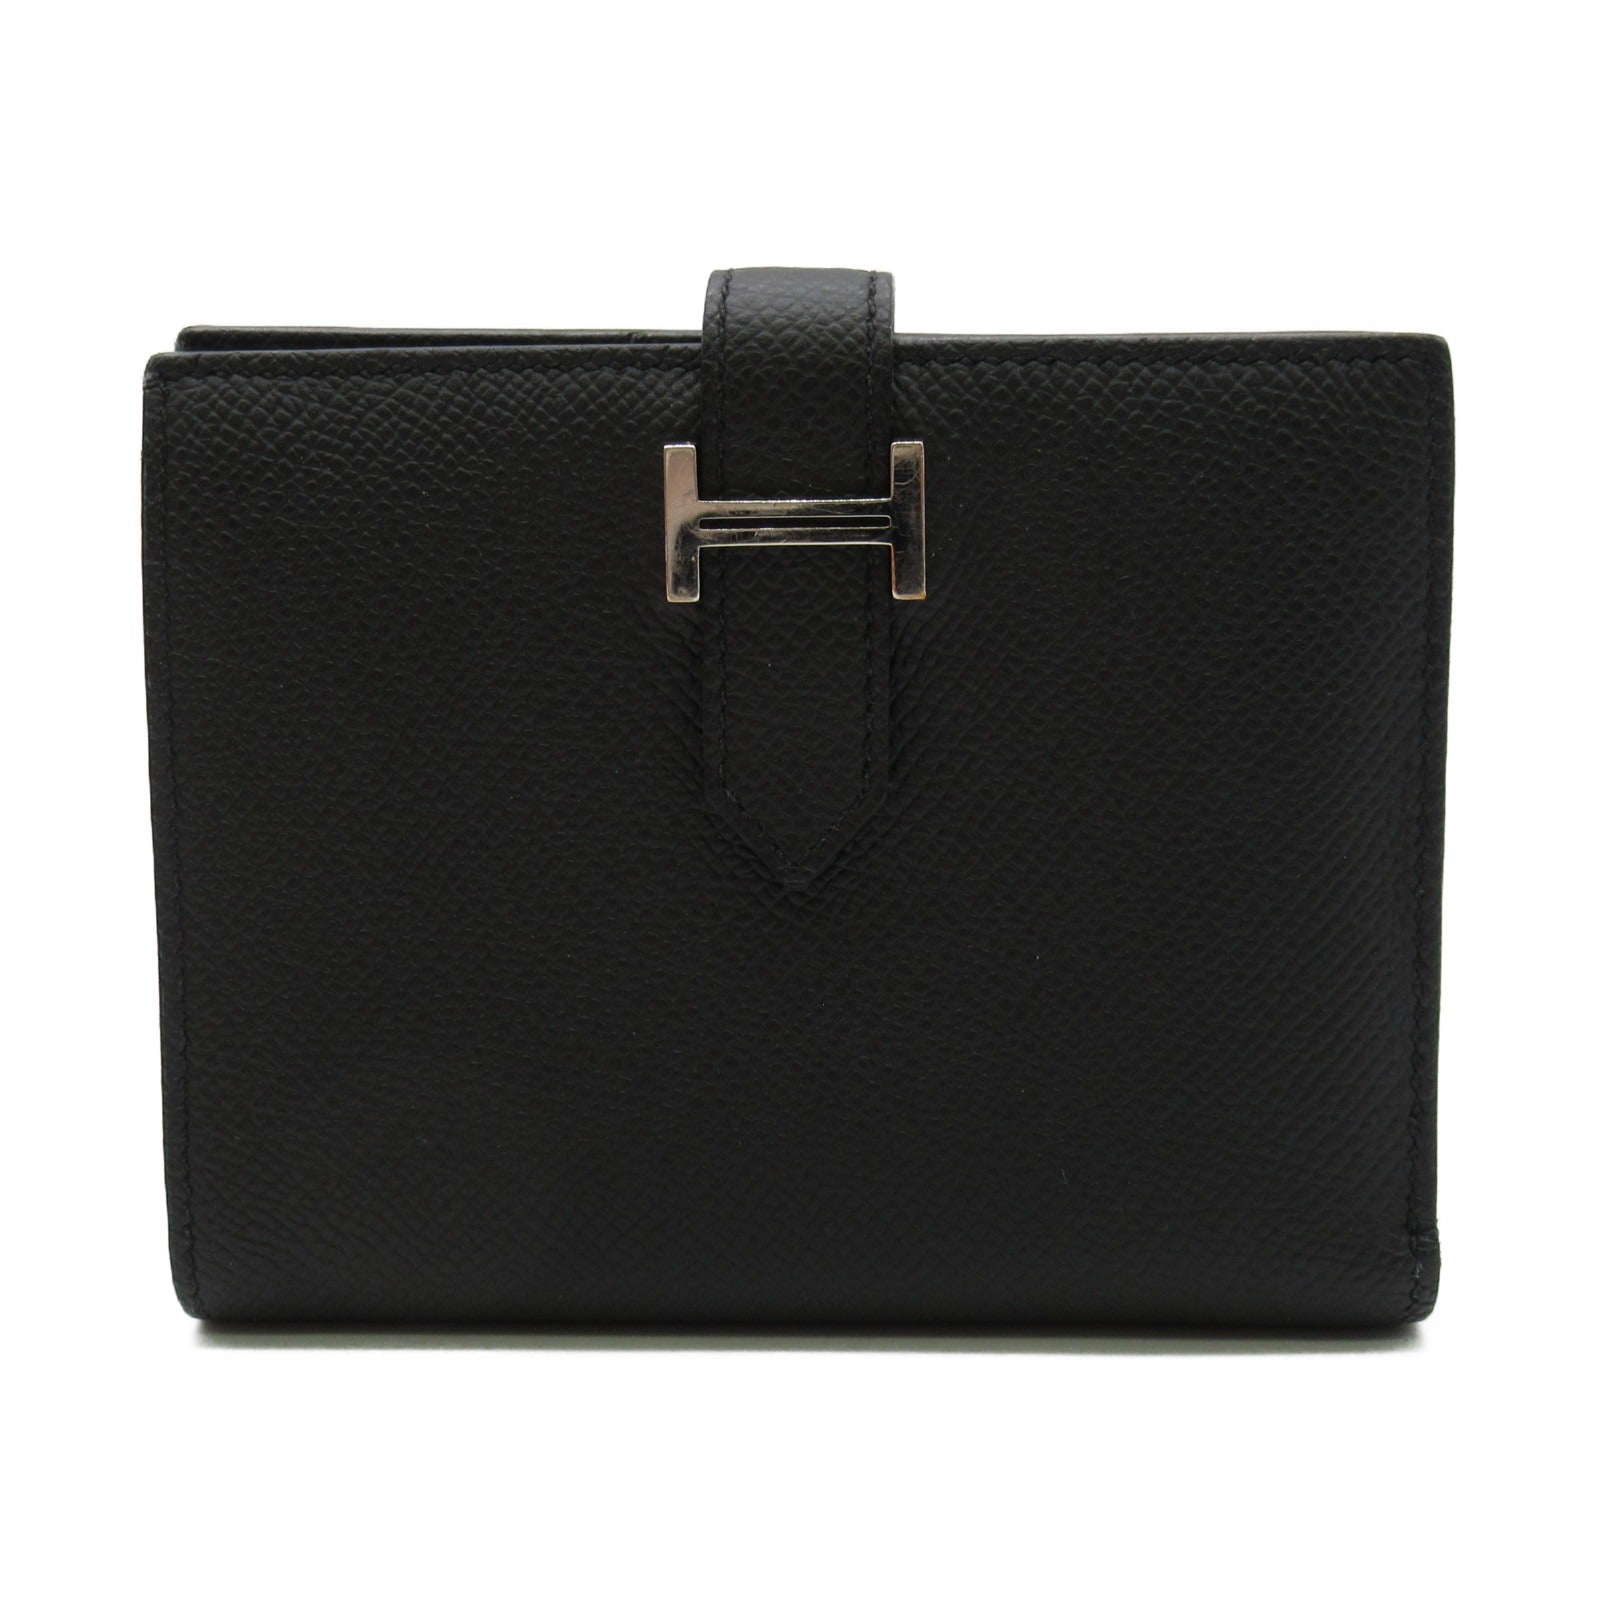 Hermes Hermes  Compact Black Double Fold Wallet Wallet Leather  Black